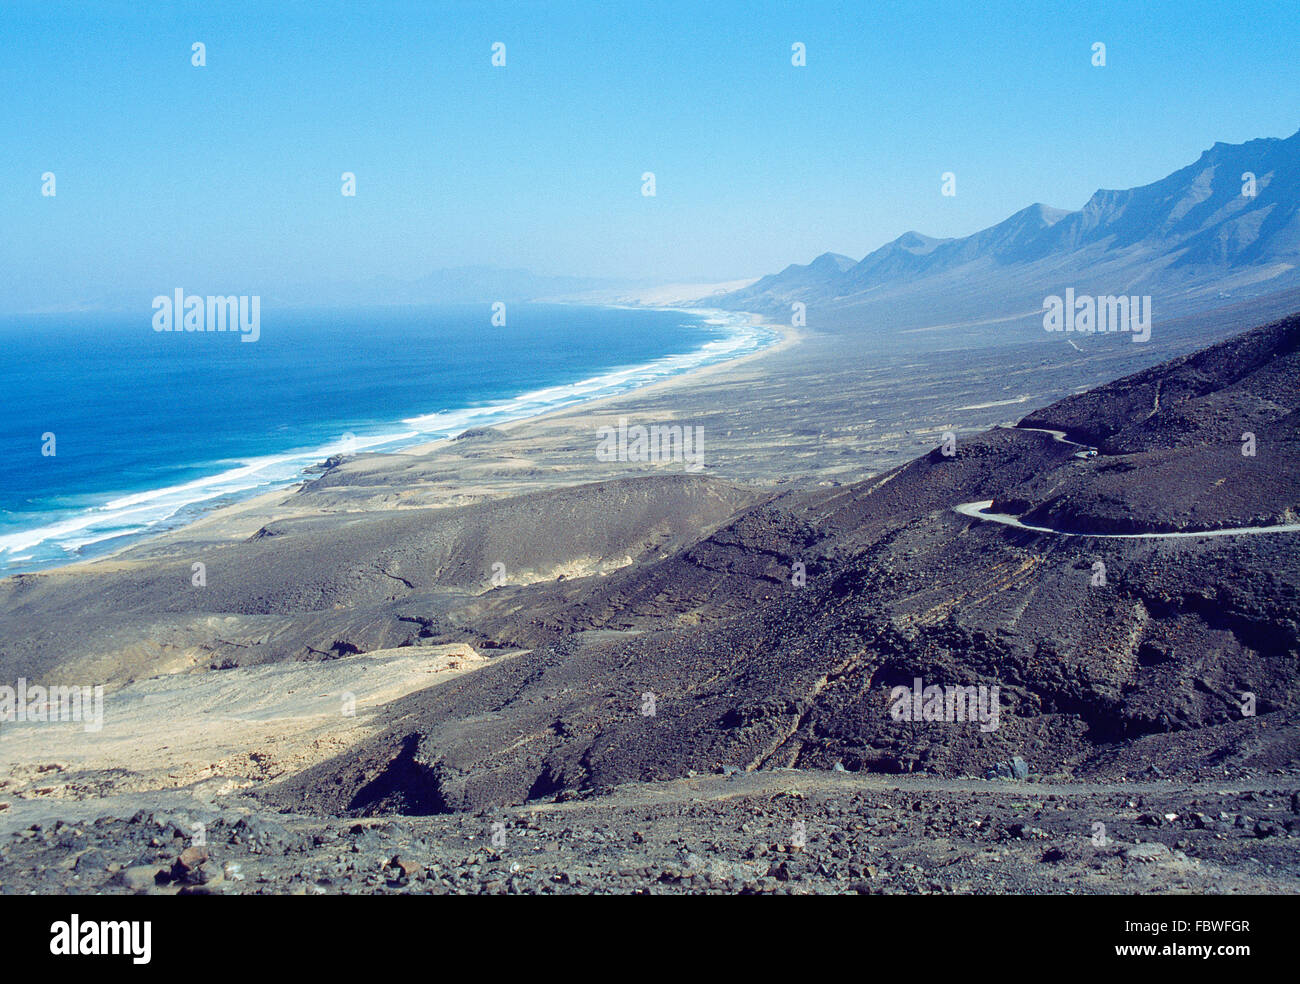 Barlovento beach. Jandia Nature Reserve, Fuerteventura island, Canary Islands, Spain. Stock Photo